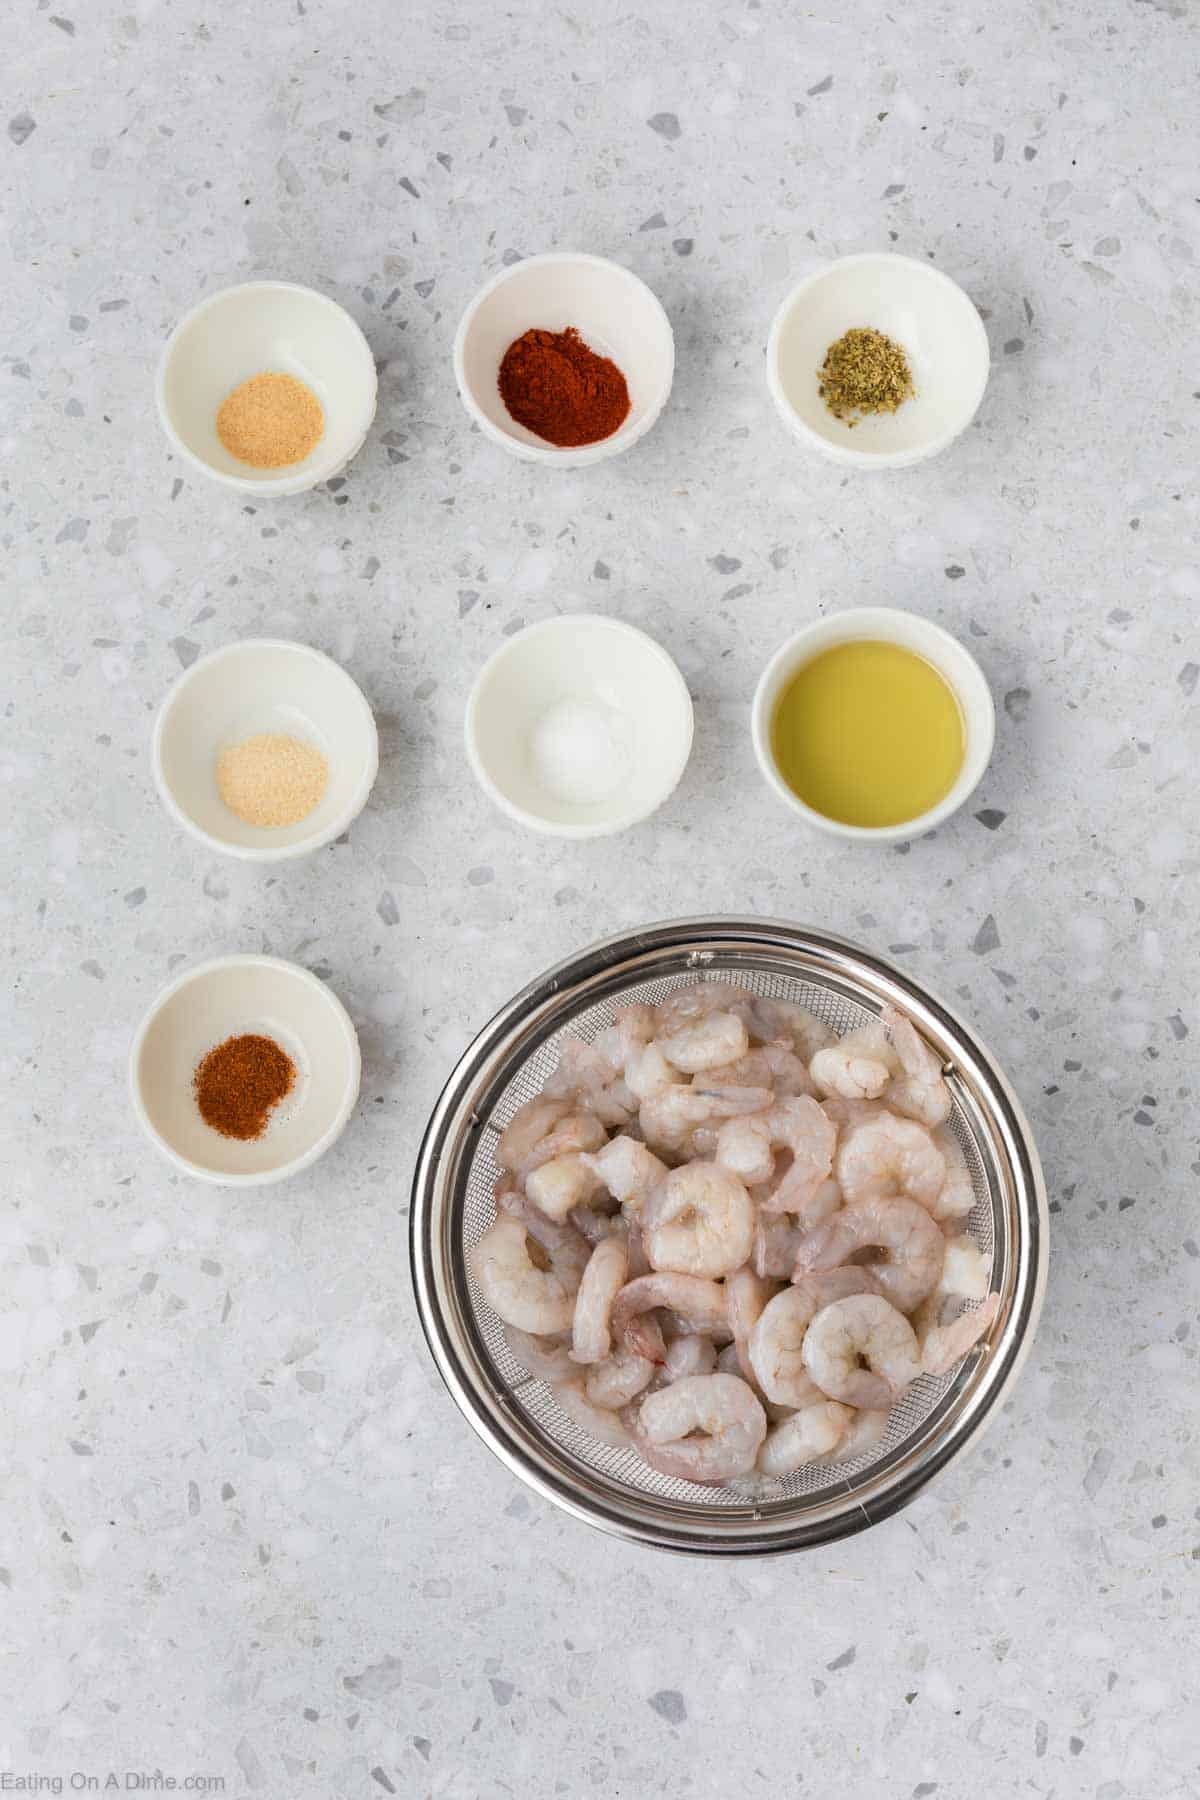 Ingredients - Raw Shrimp, avocado oil, onion powder, garlic powder, cayenne pepper, oregano, salt, paprika